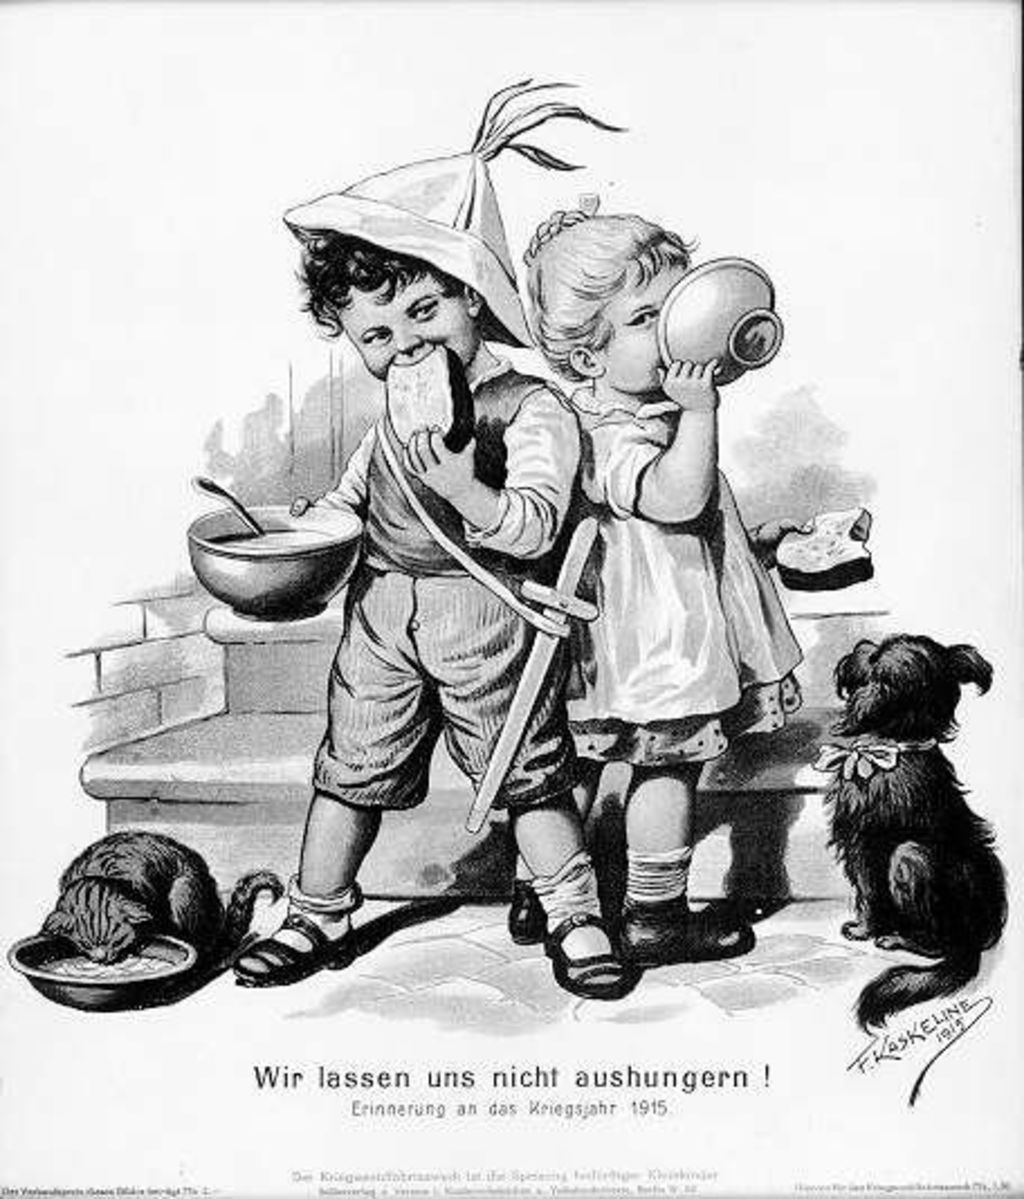 Exponat: Graphik: Propagandagraphik zum Lebensmittelmangel, 1915